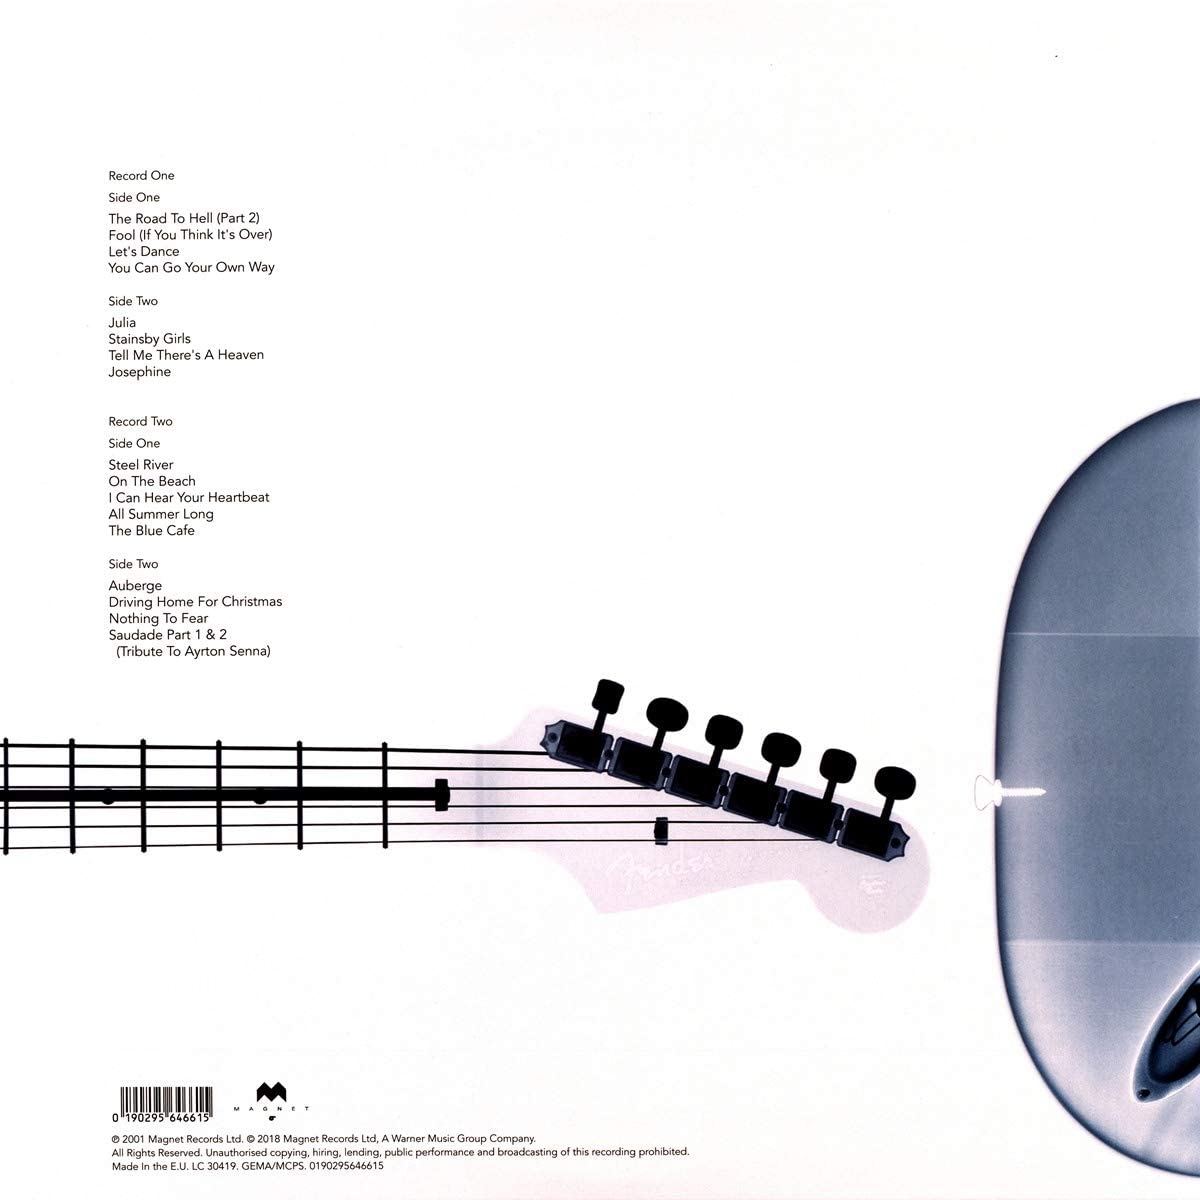 The Very Best of Chris Rea [Vinyl] 